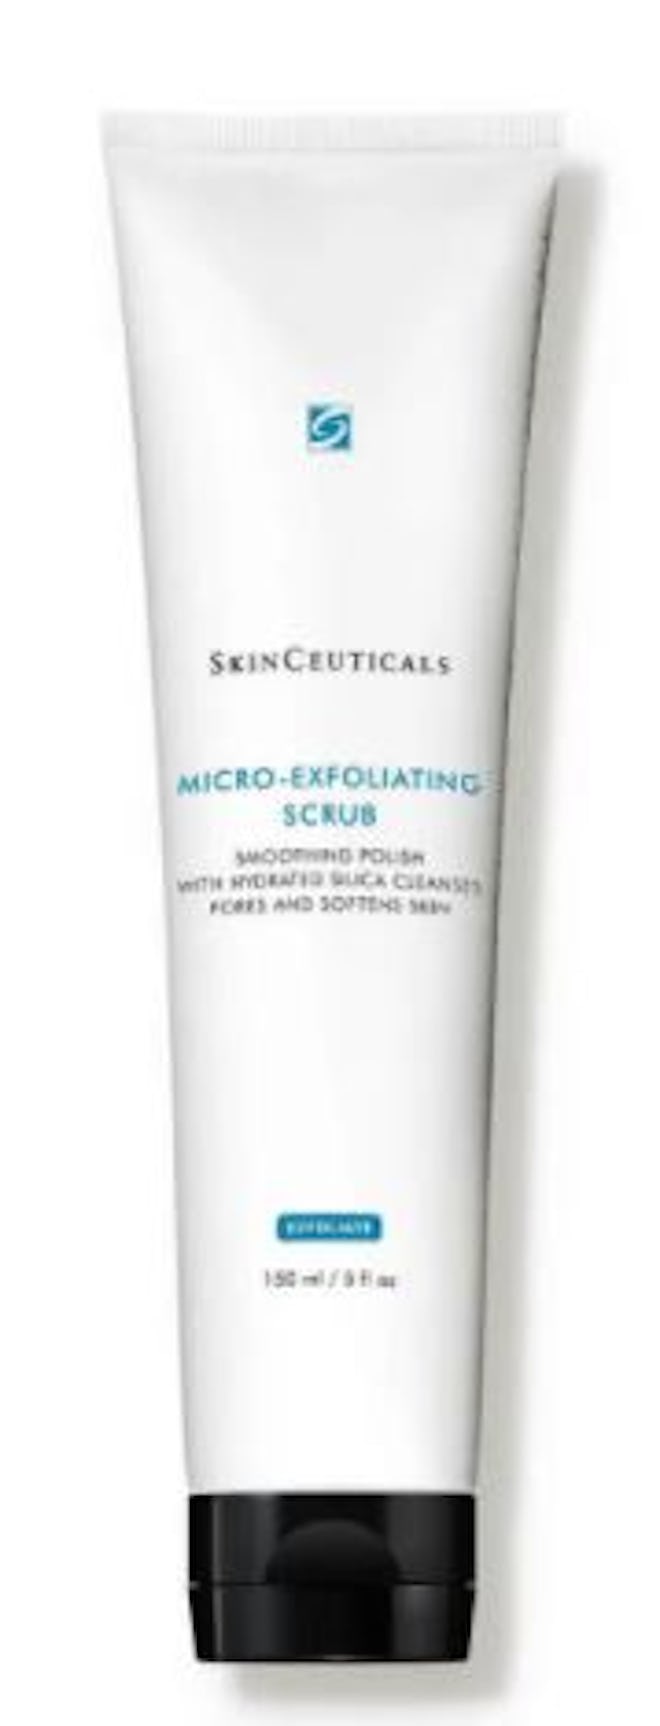 SkinCeuticals Micro-Exfoliating Scrub for anti-aging results